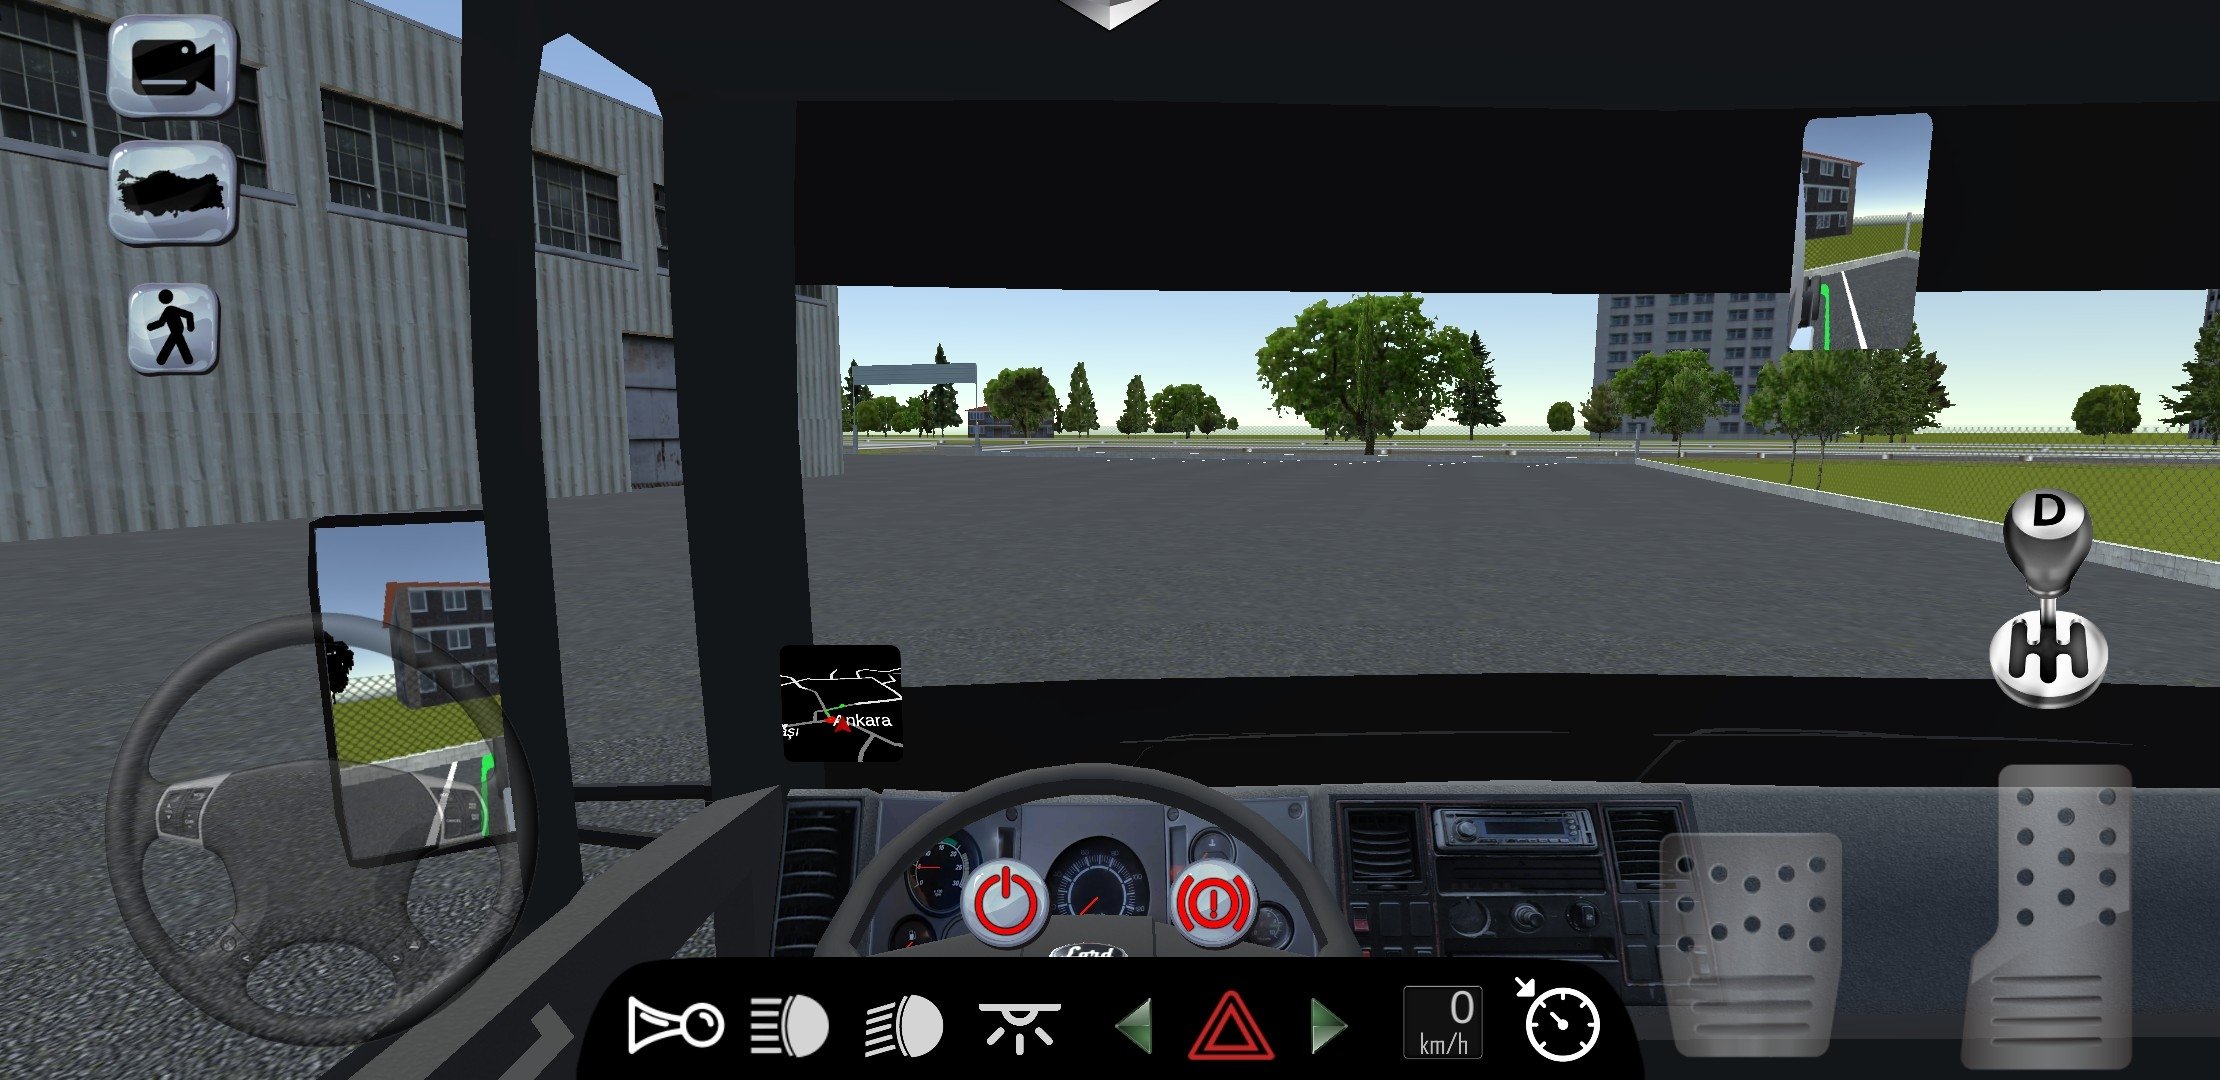 Cargo Simulator 2023 download the new